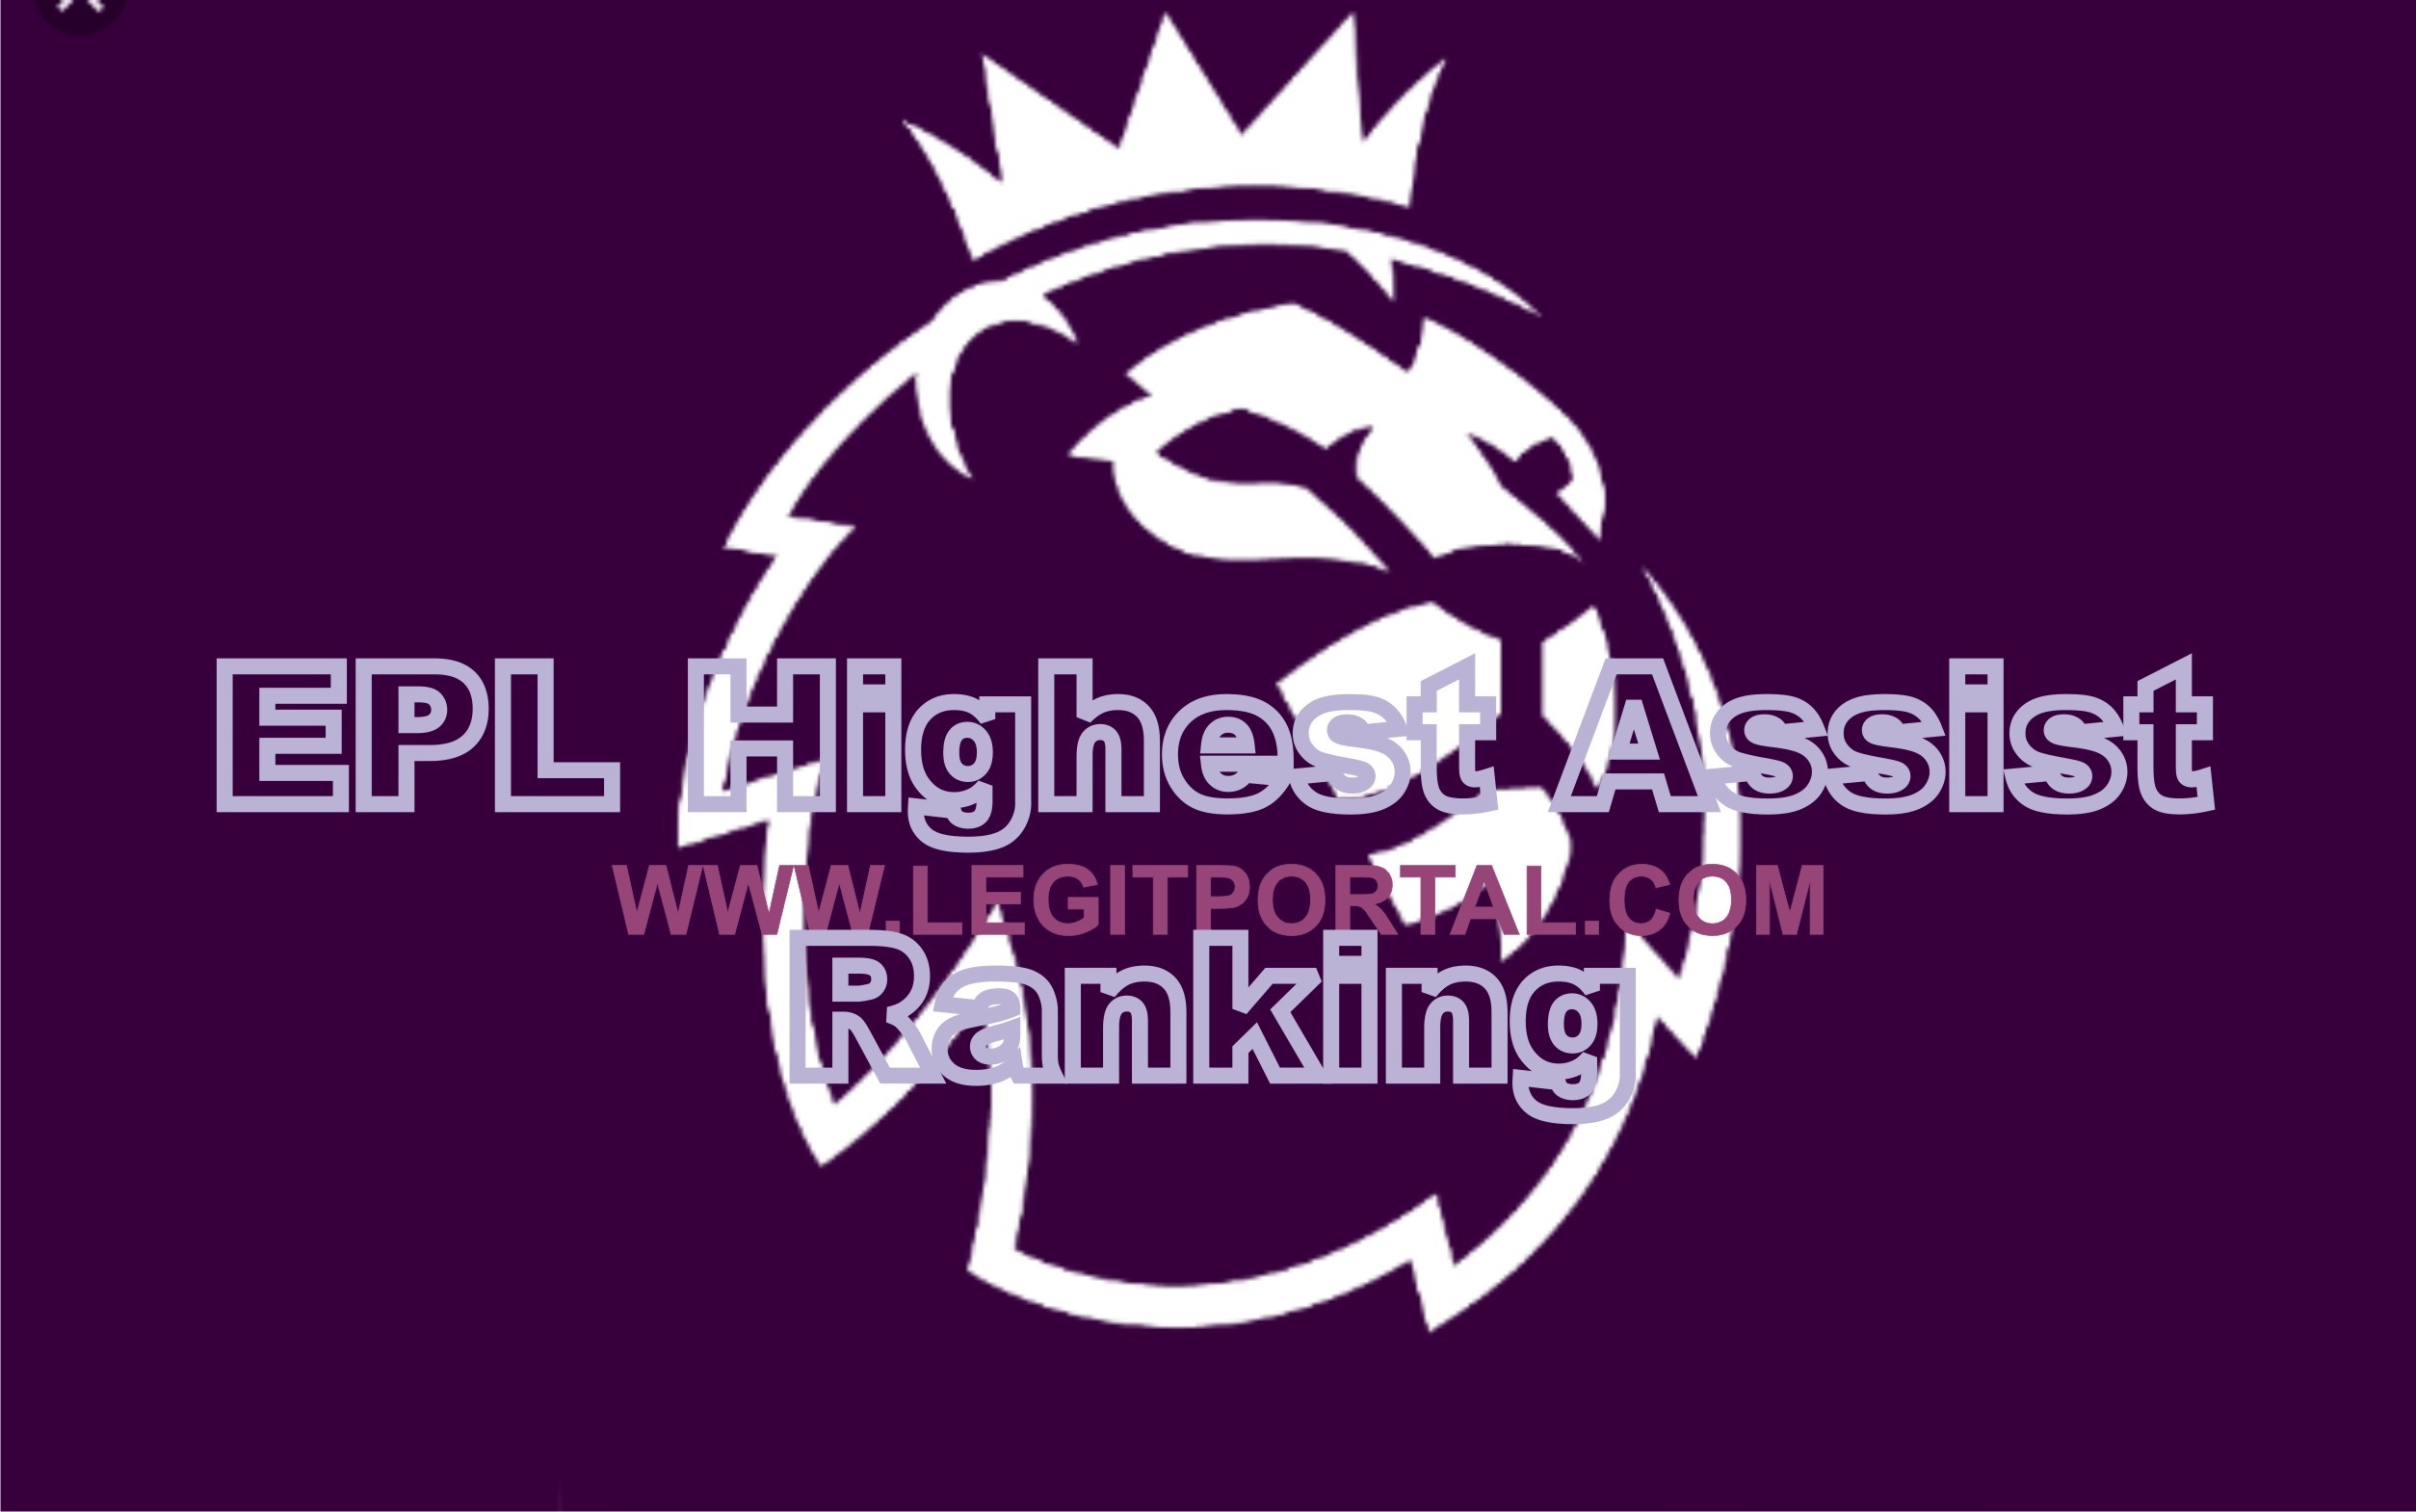 English Premier League (EPL) Highest Assist 2019/2020 | Playmaker Award Standings